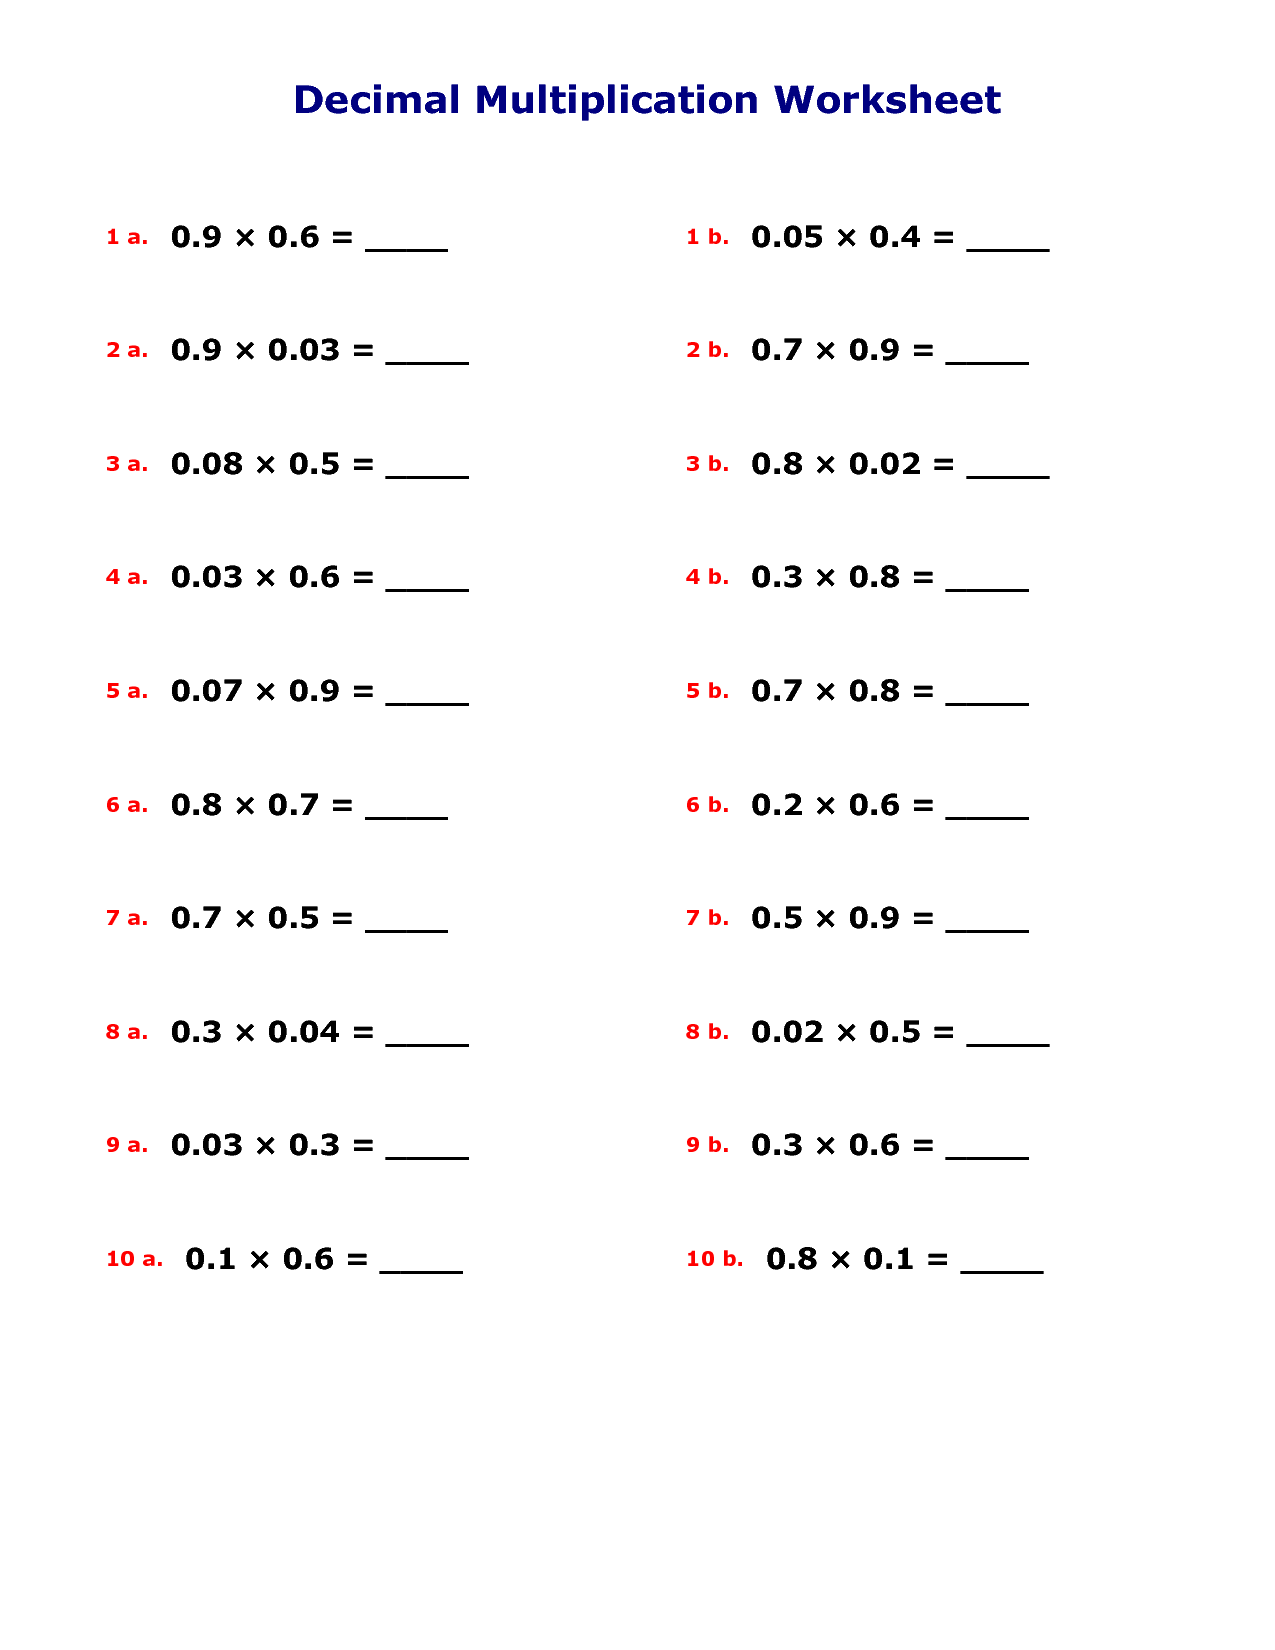 Division And Multiplication Decimals Worksheets